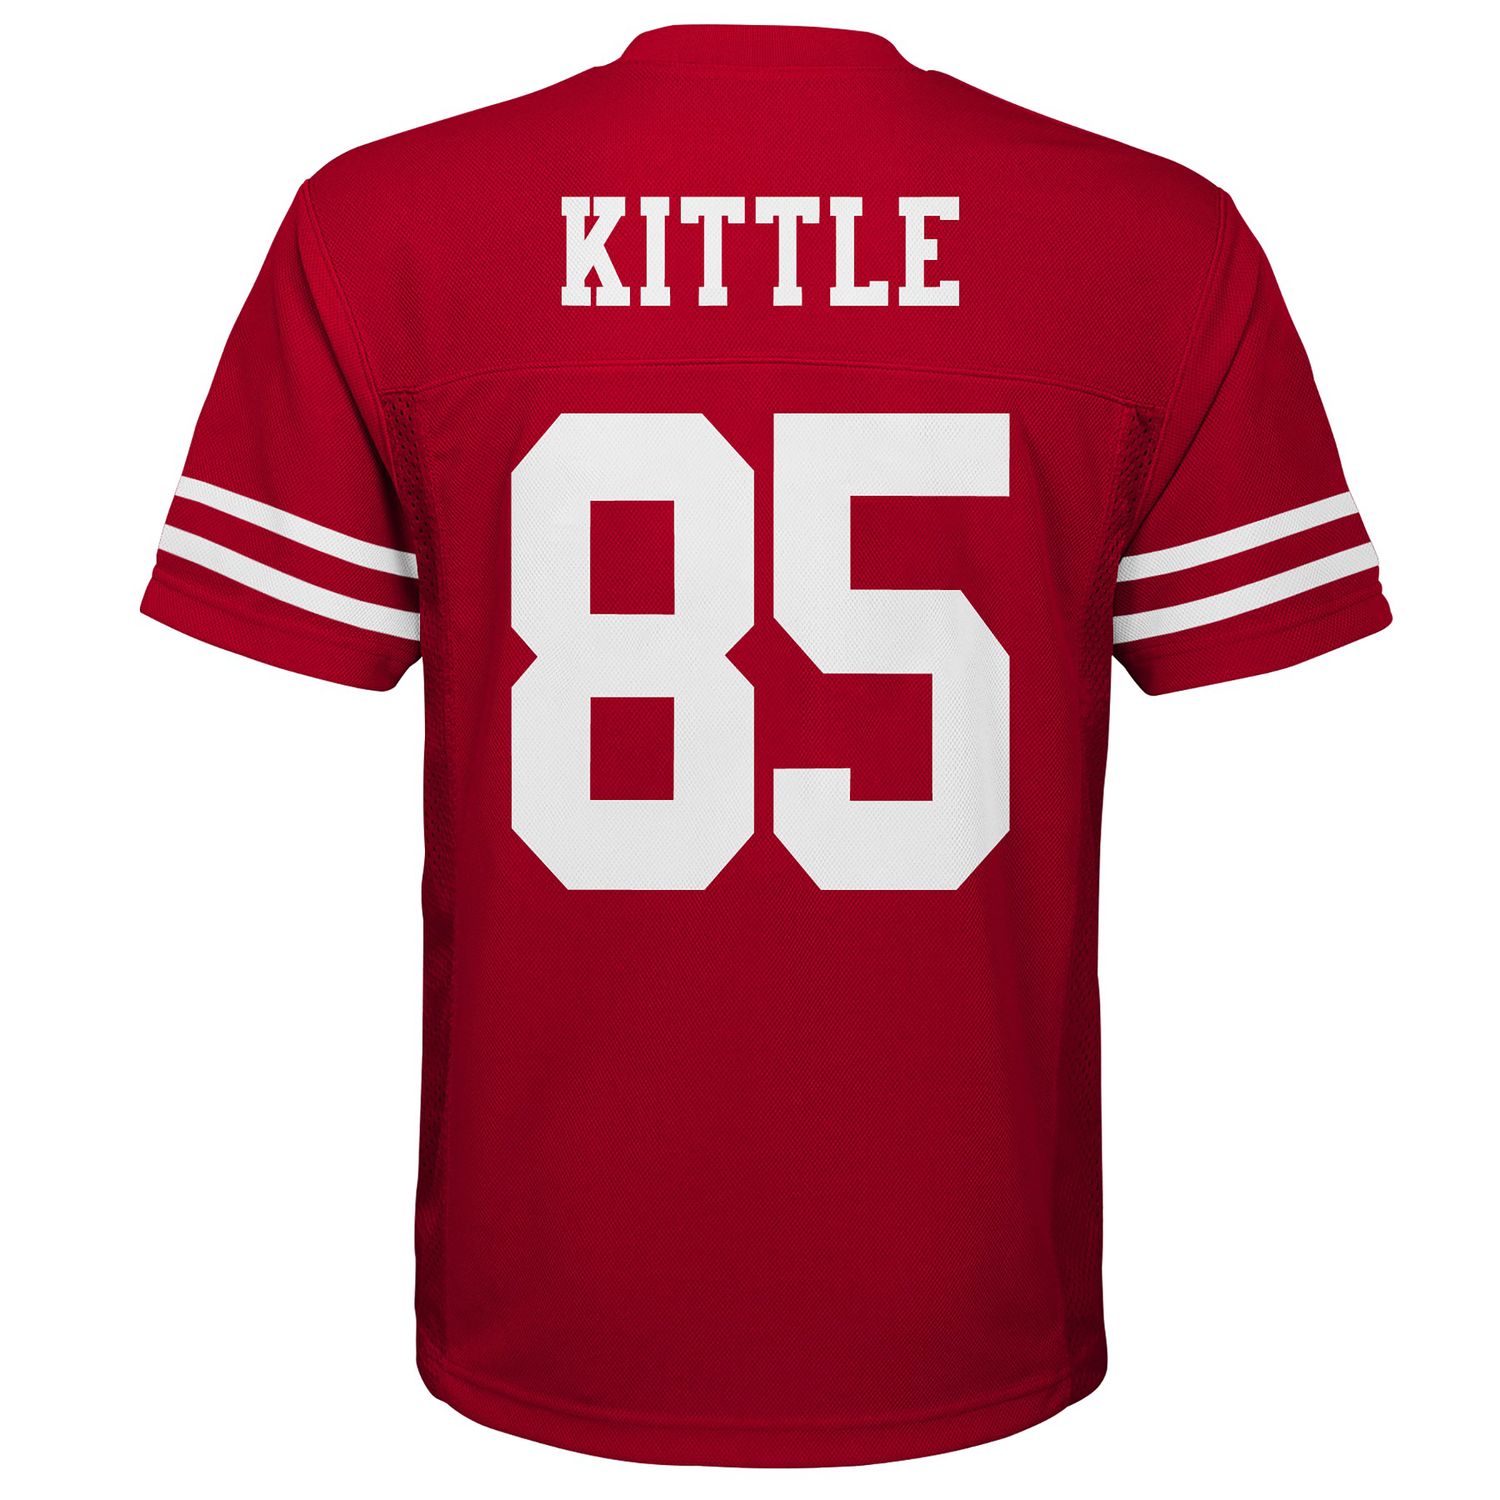 49ers replica jersey